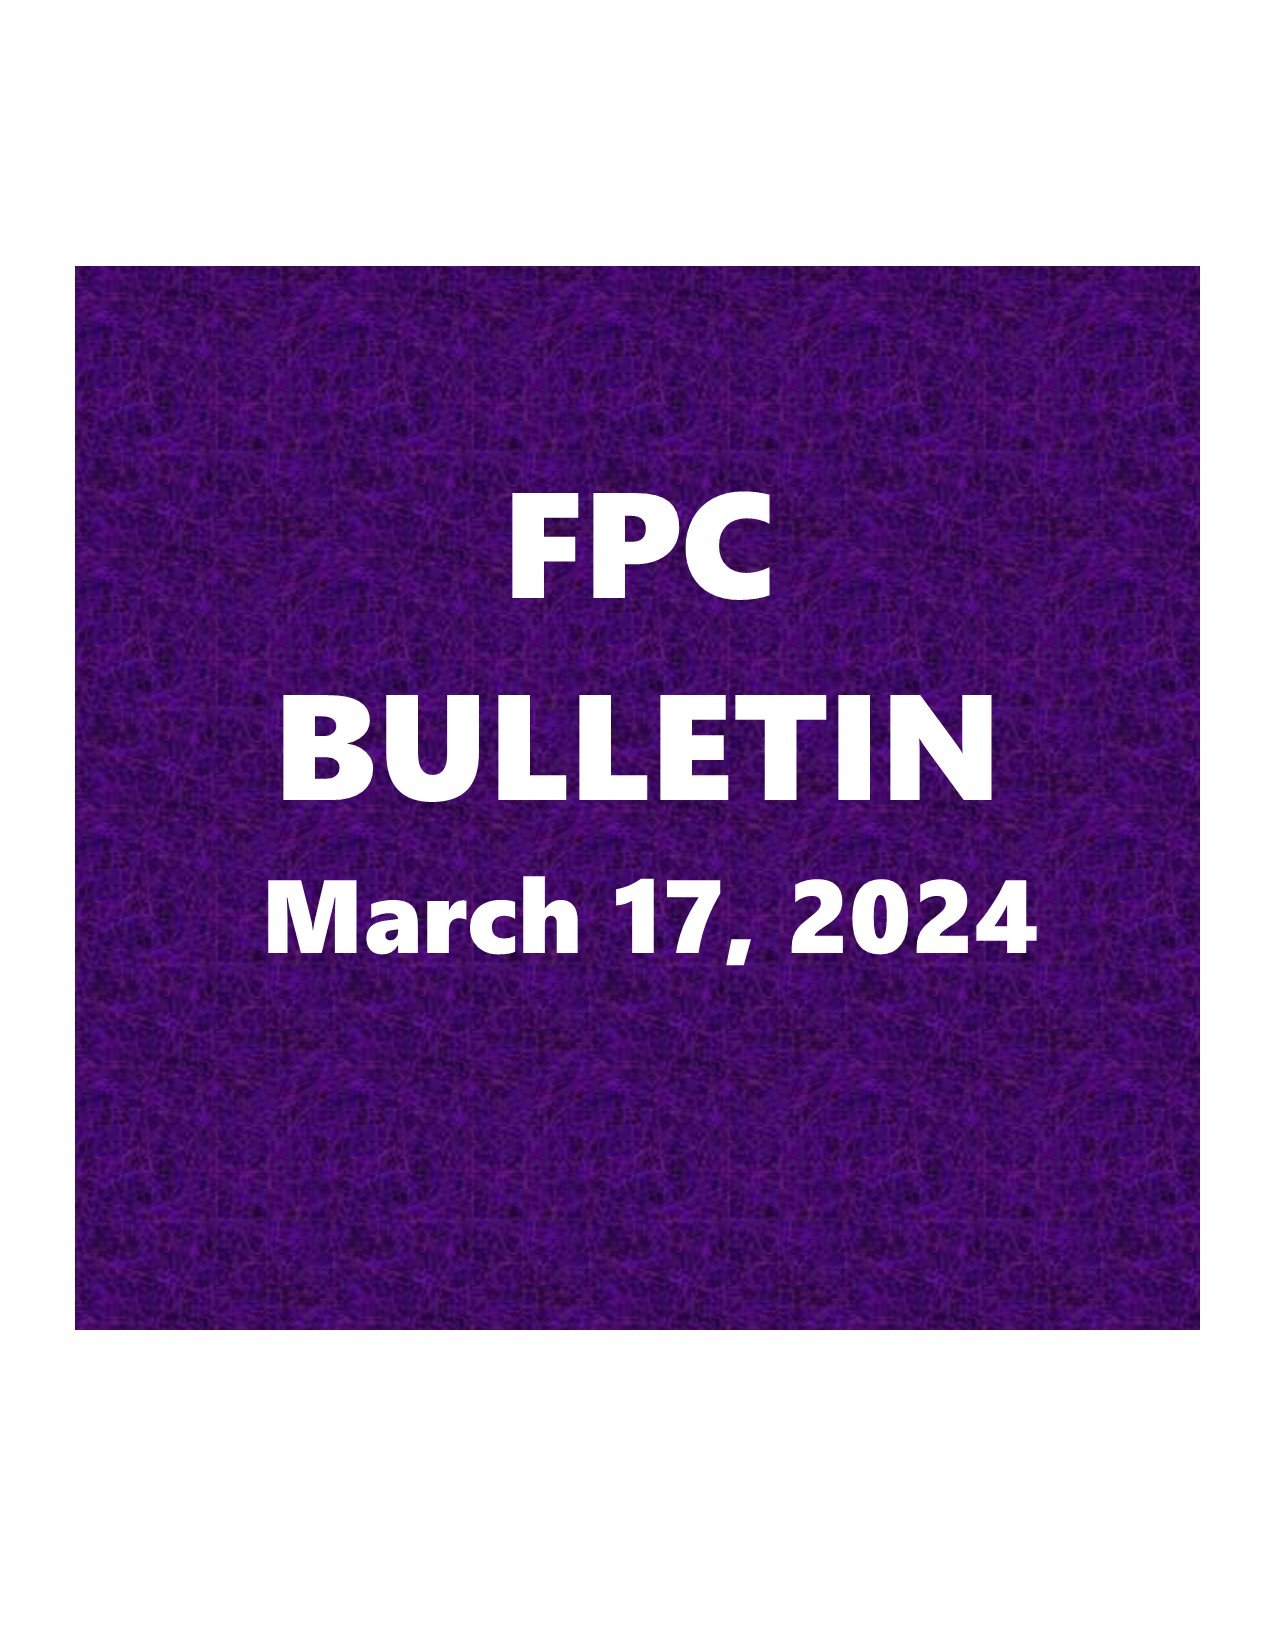 a Button - Bulletin March 17 2024.jpg